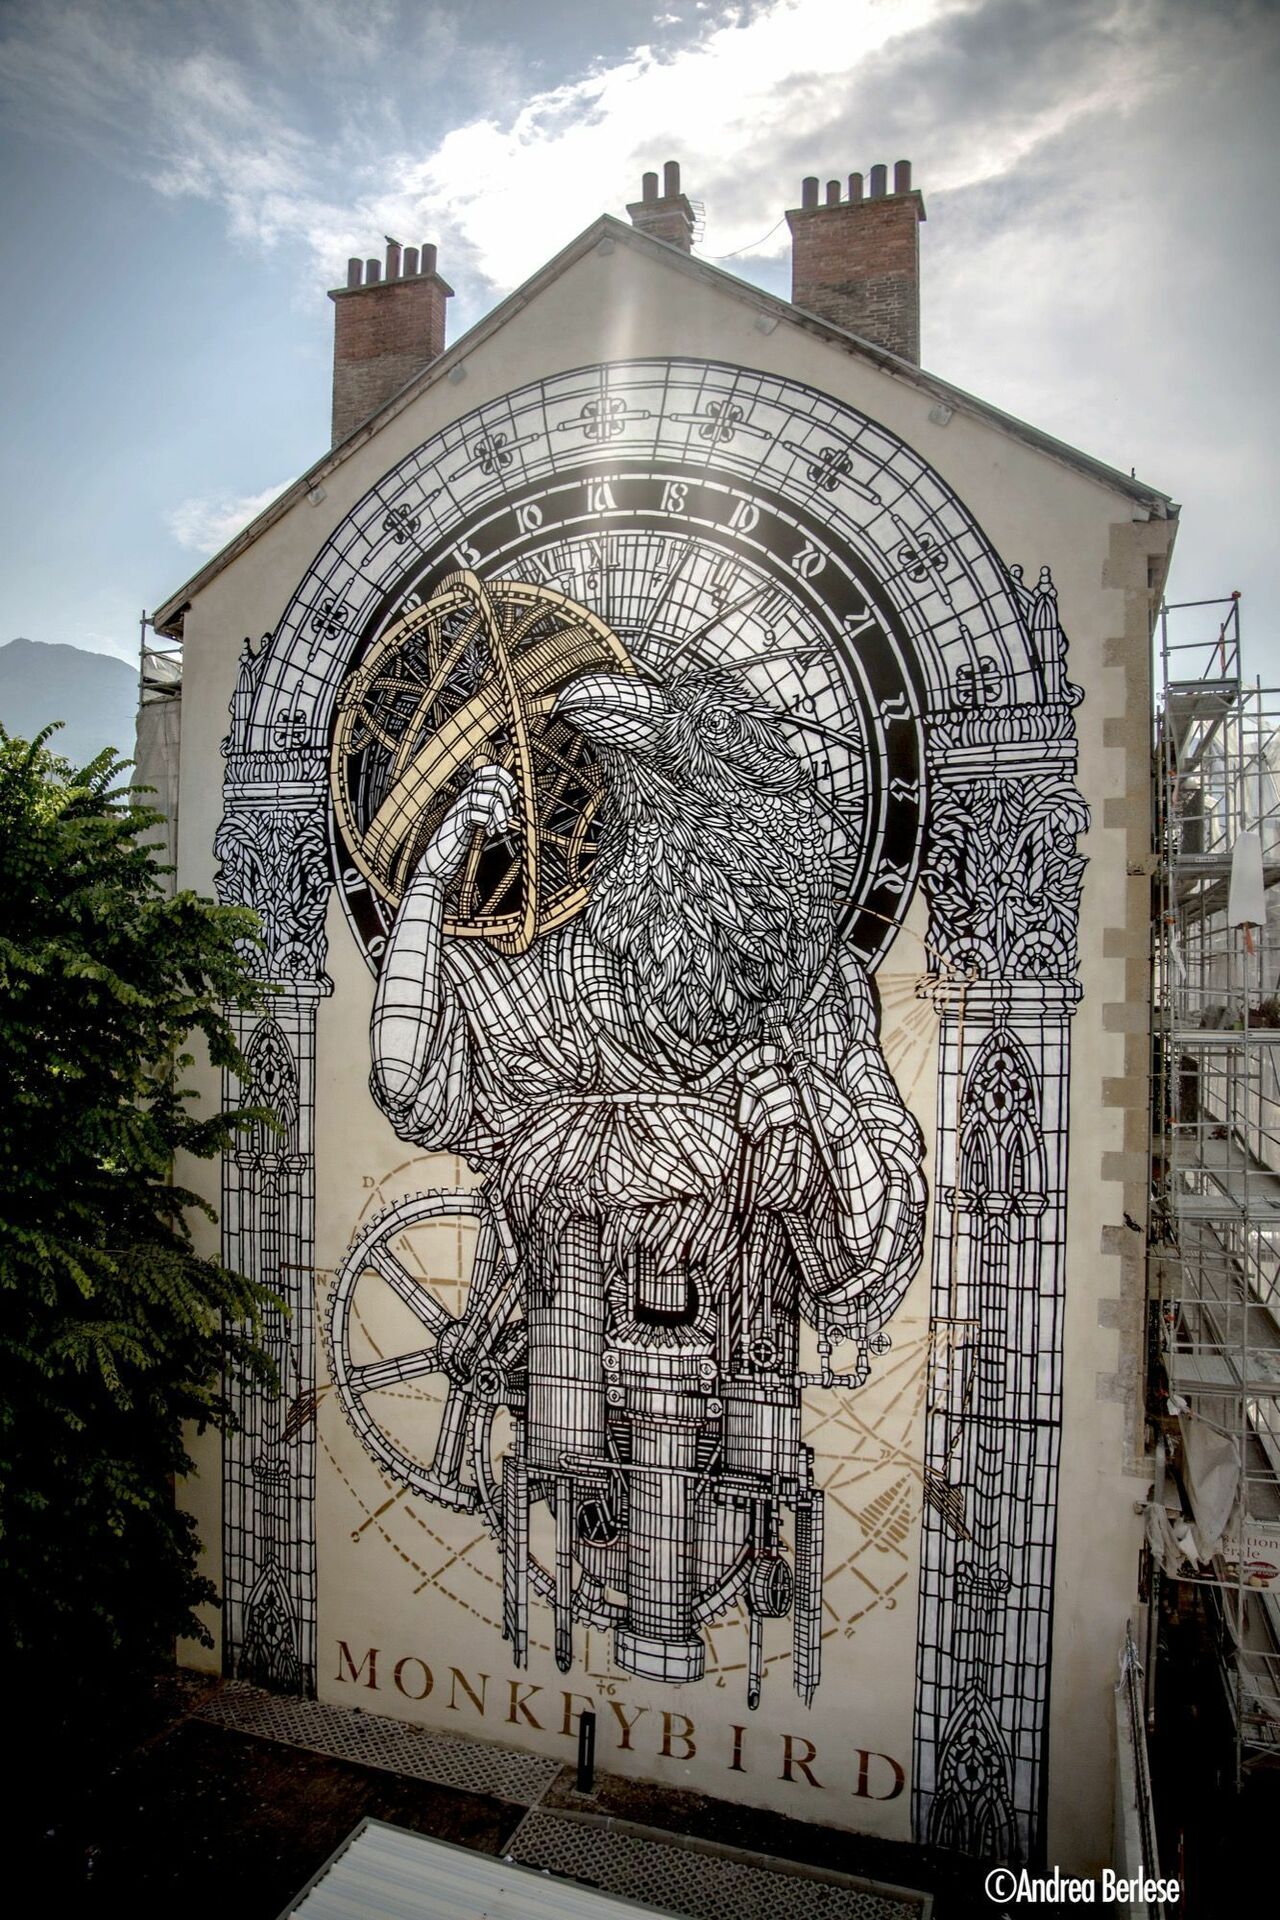 Monkeybird in Grenoble, France#streetart #mural #graffiti #art https://t.co/H1zXUAAn8e